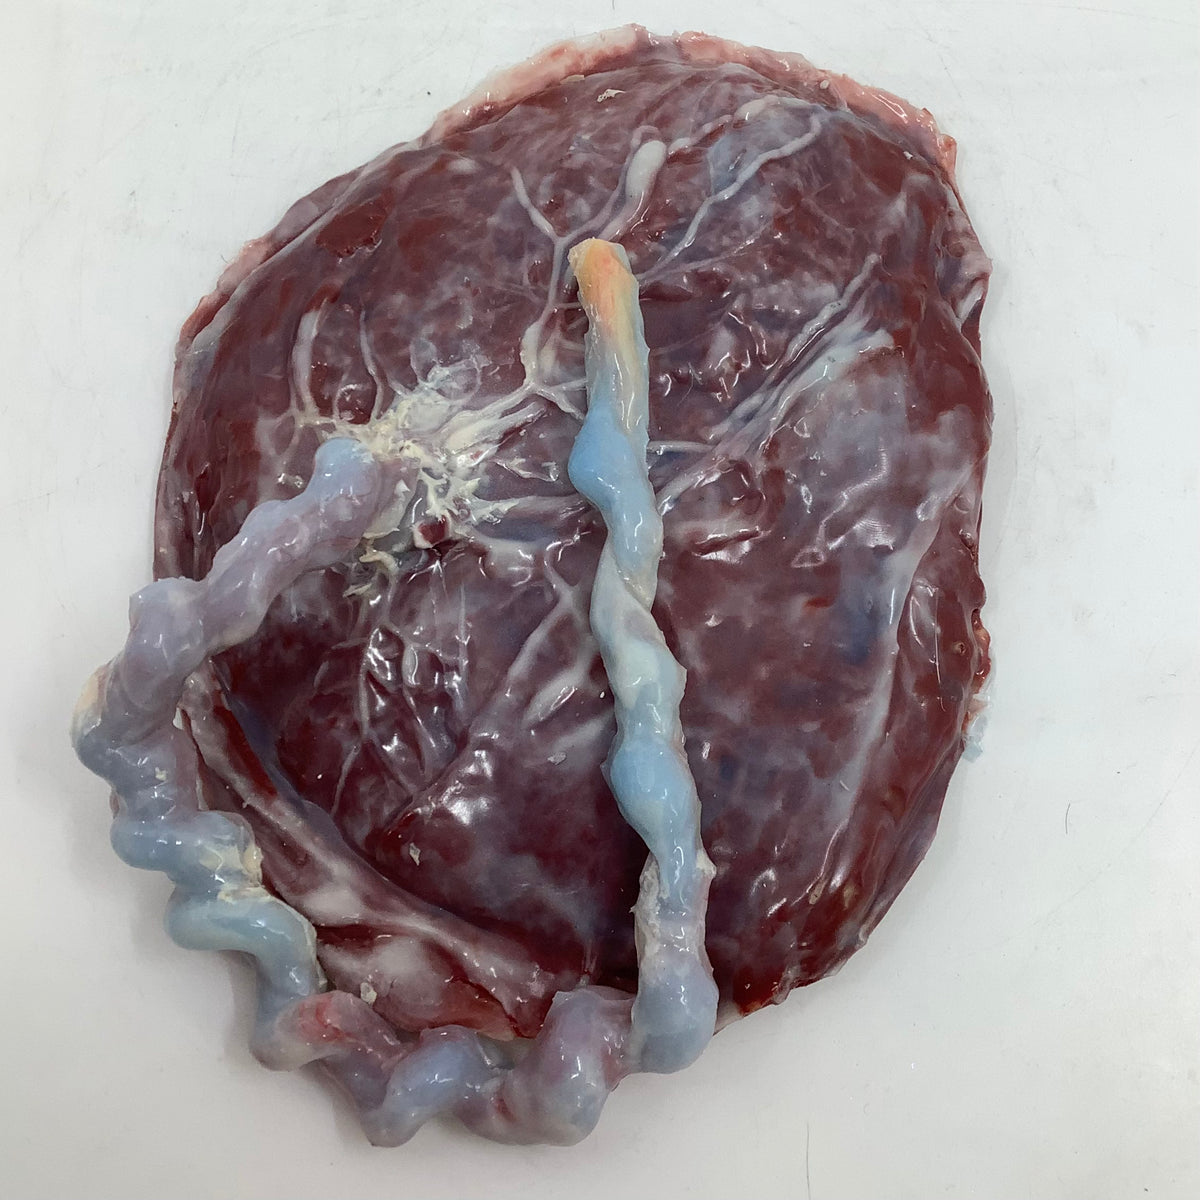 MO724 Full term Placenta and Umbilical Cord